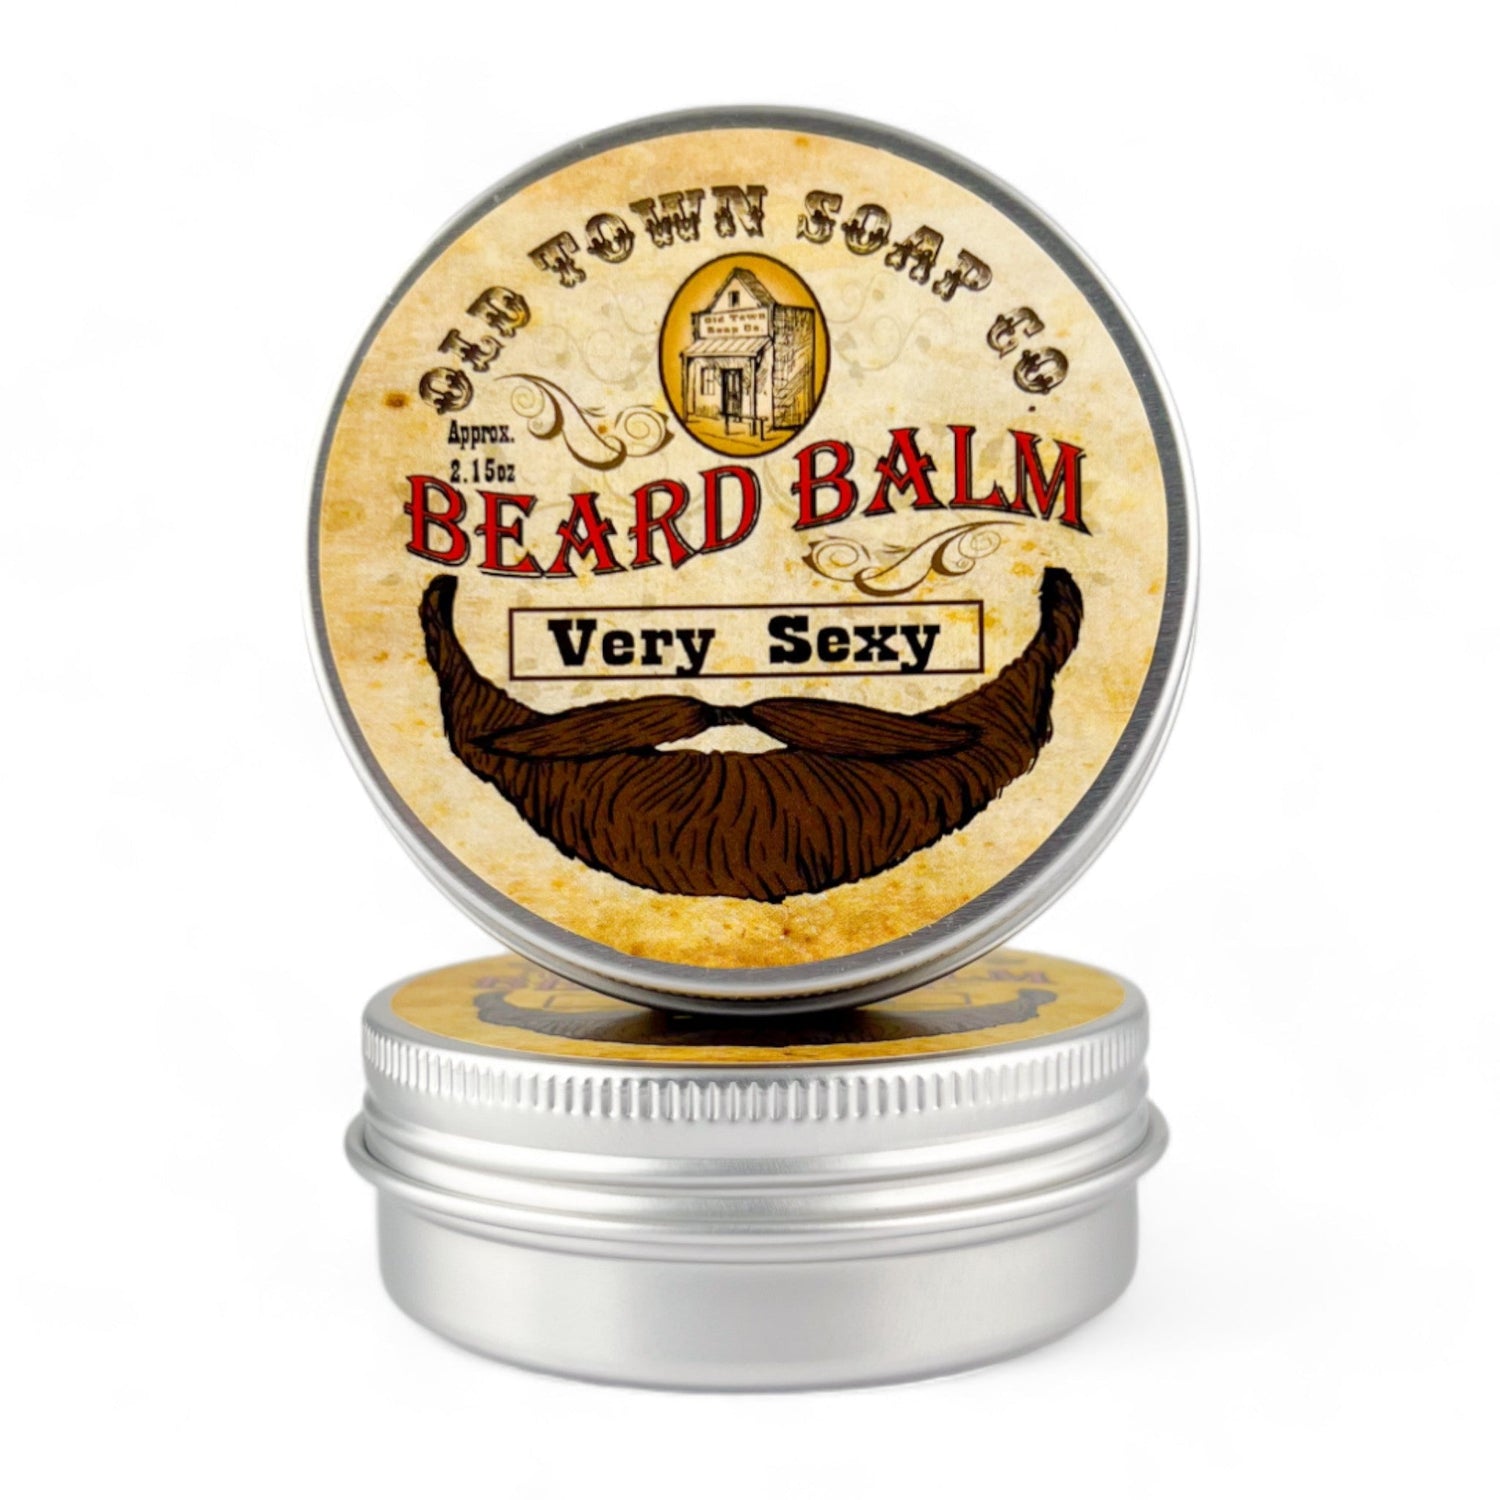 Very Sexy Beard Balm - Old Town Soap Co.